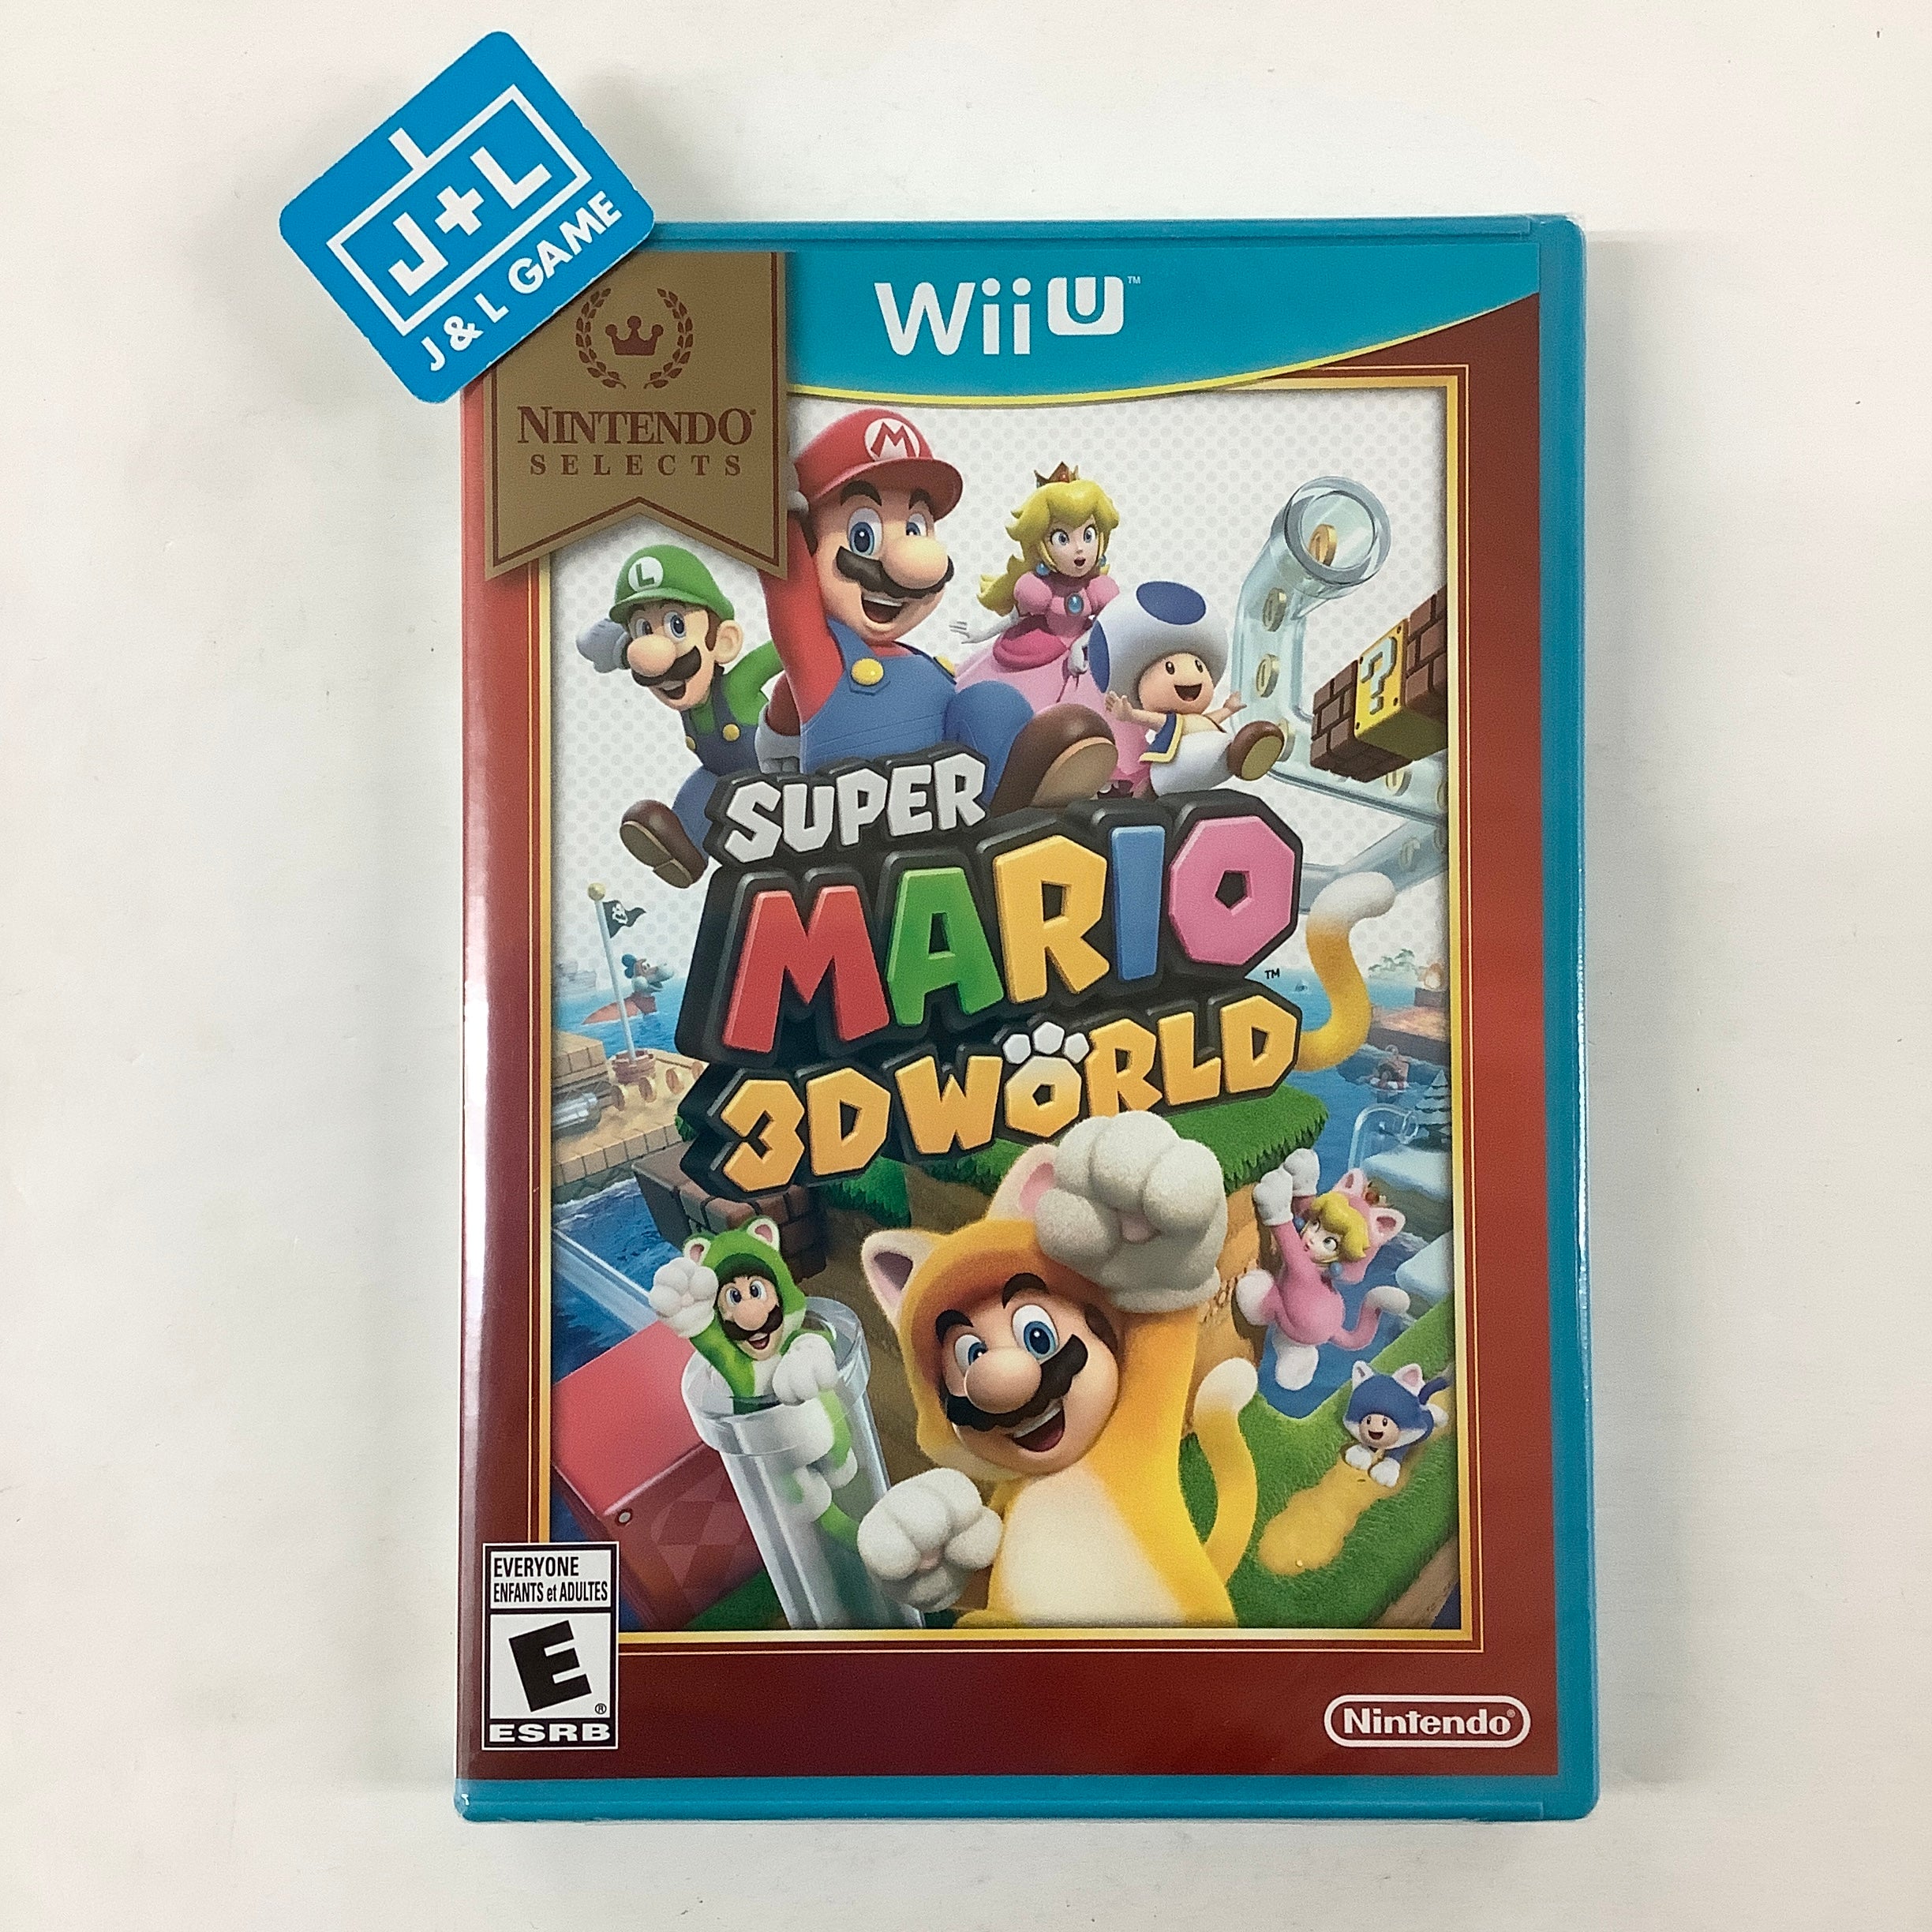 Super Mario 3D World (Nintendo Selects) - Nintendo Wii U Video Games Nintendo   